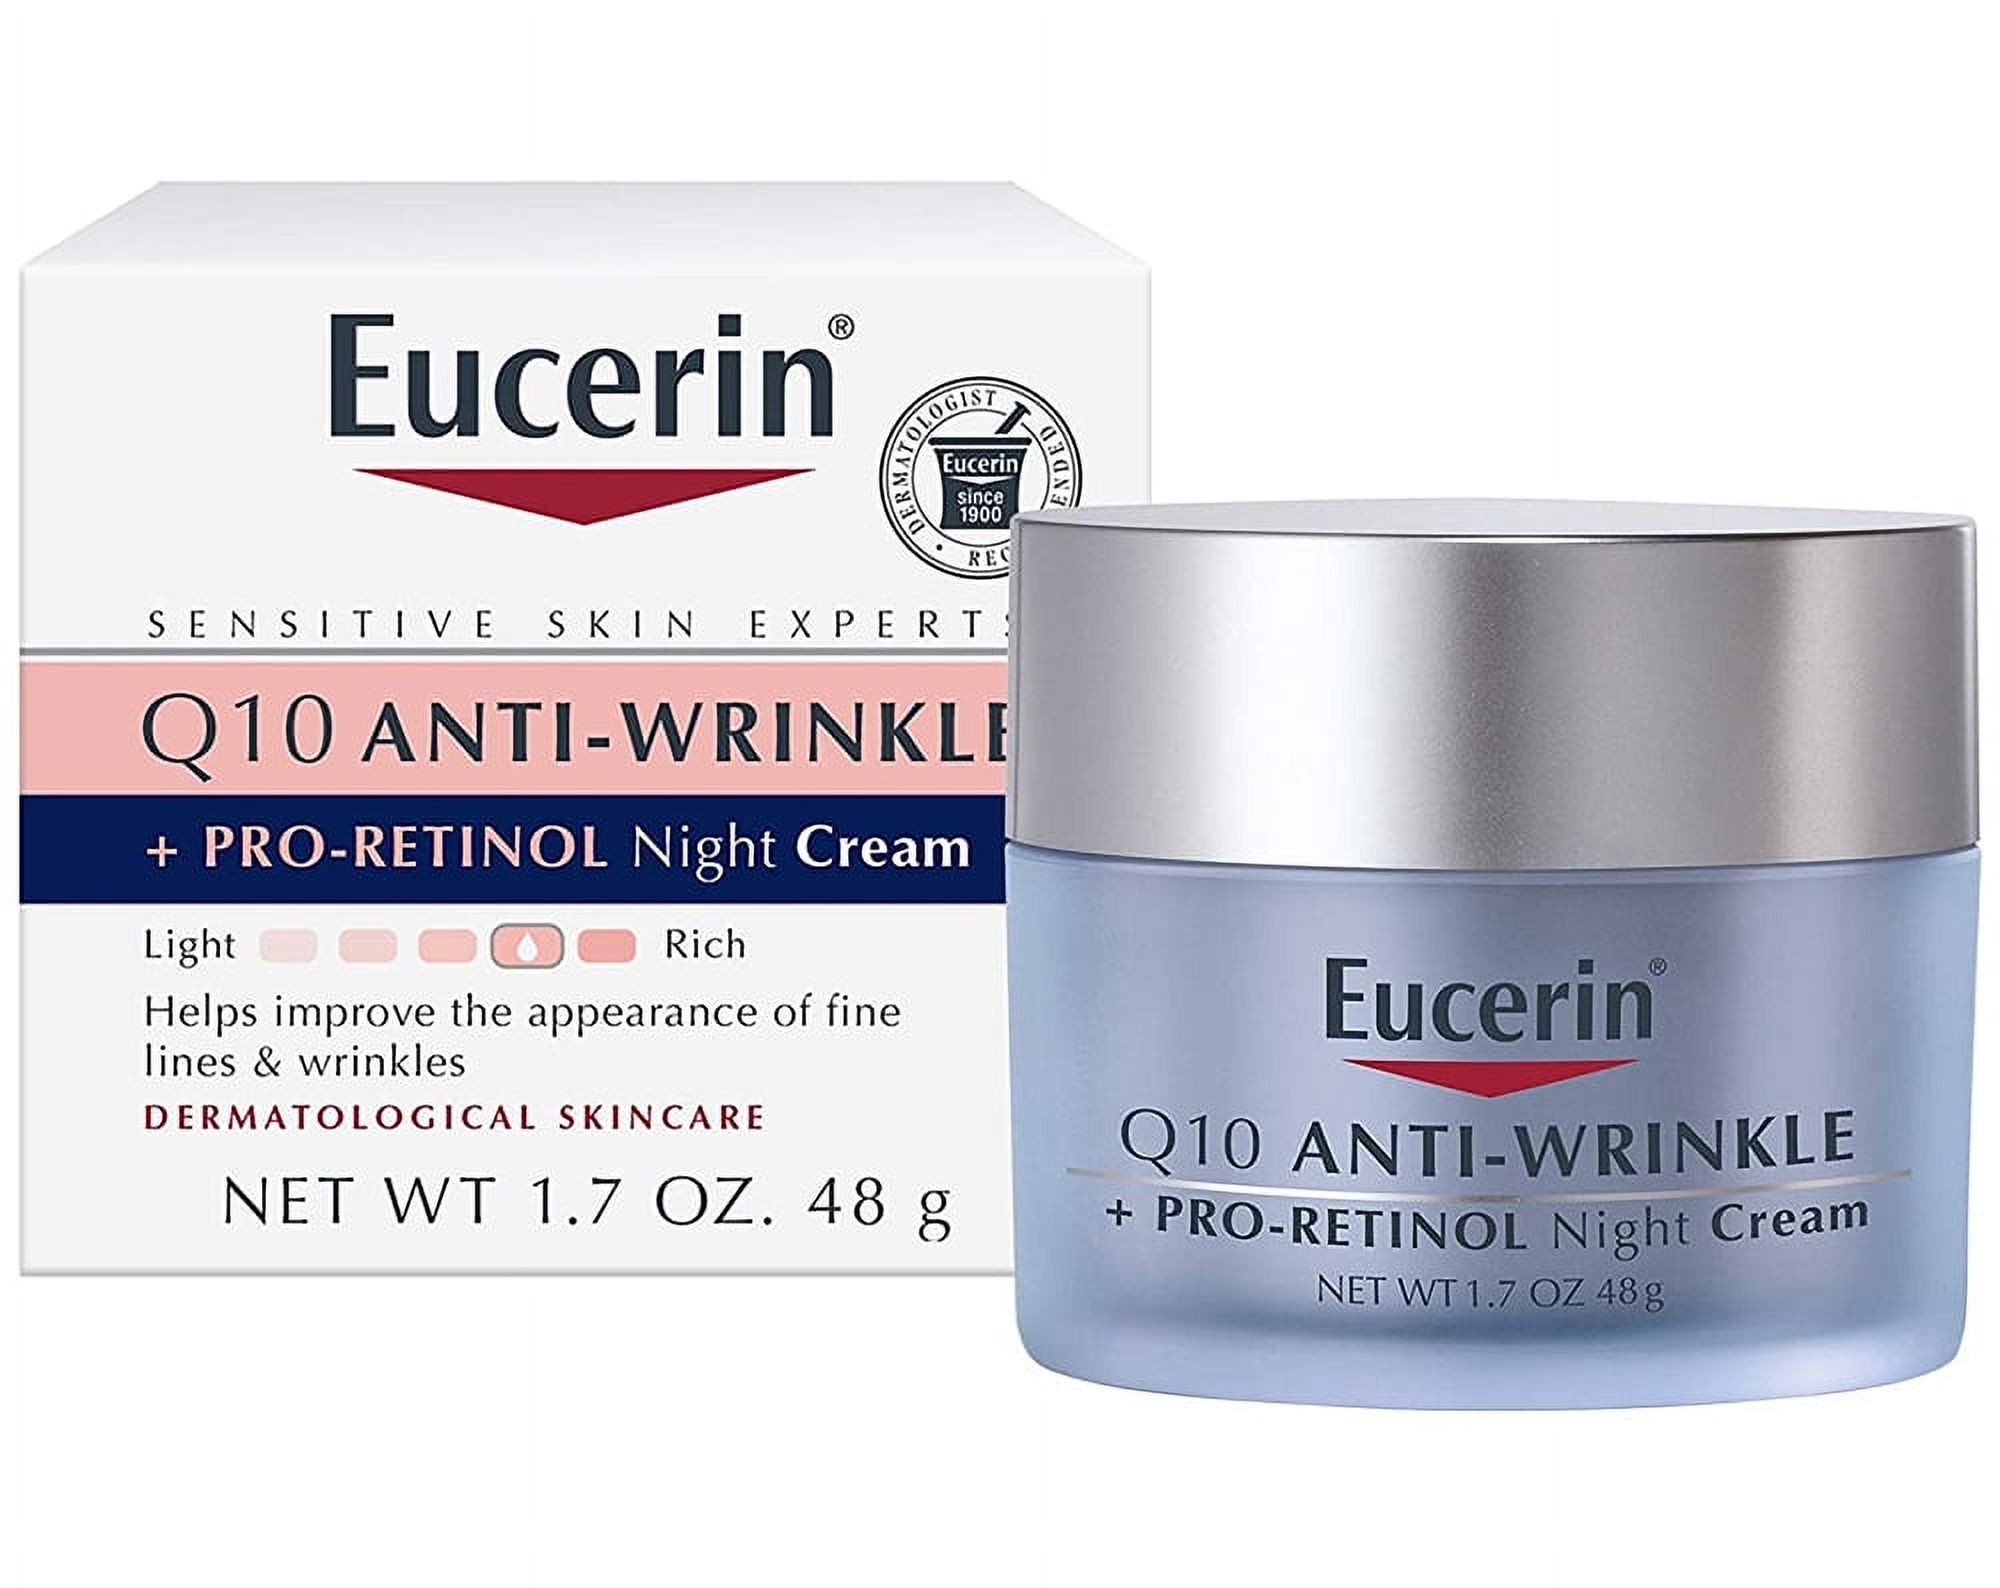 Eucerin Q10 Anti-Wrinkle Night Cream + Pro-Retinol, Facial Cream for Sensitive Skin, 1.7 Oz Jar - image 2 of 4